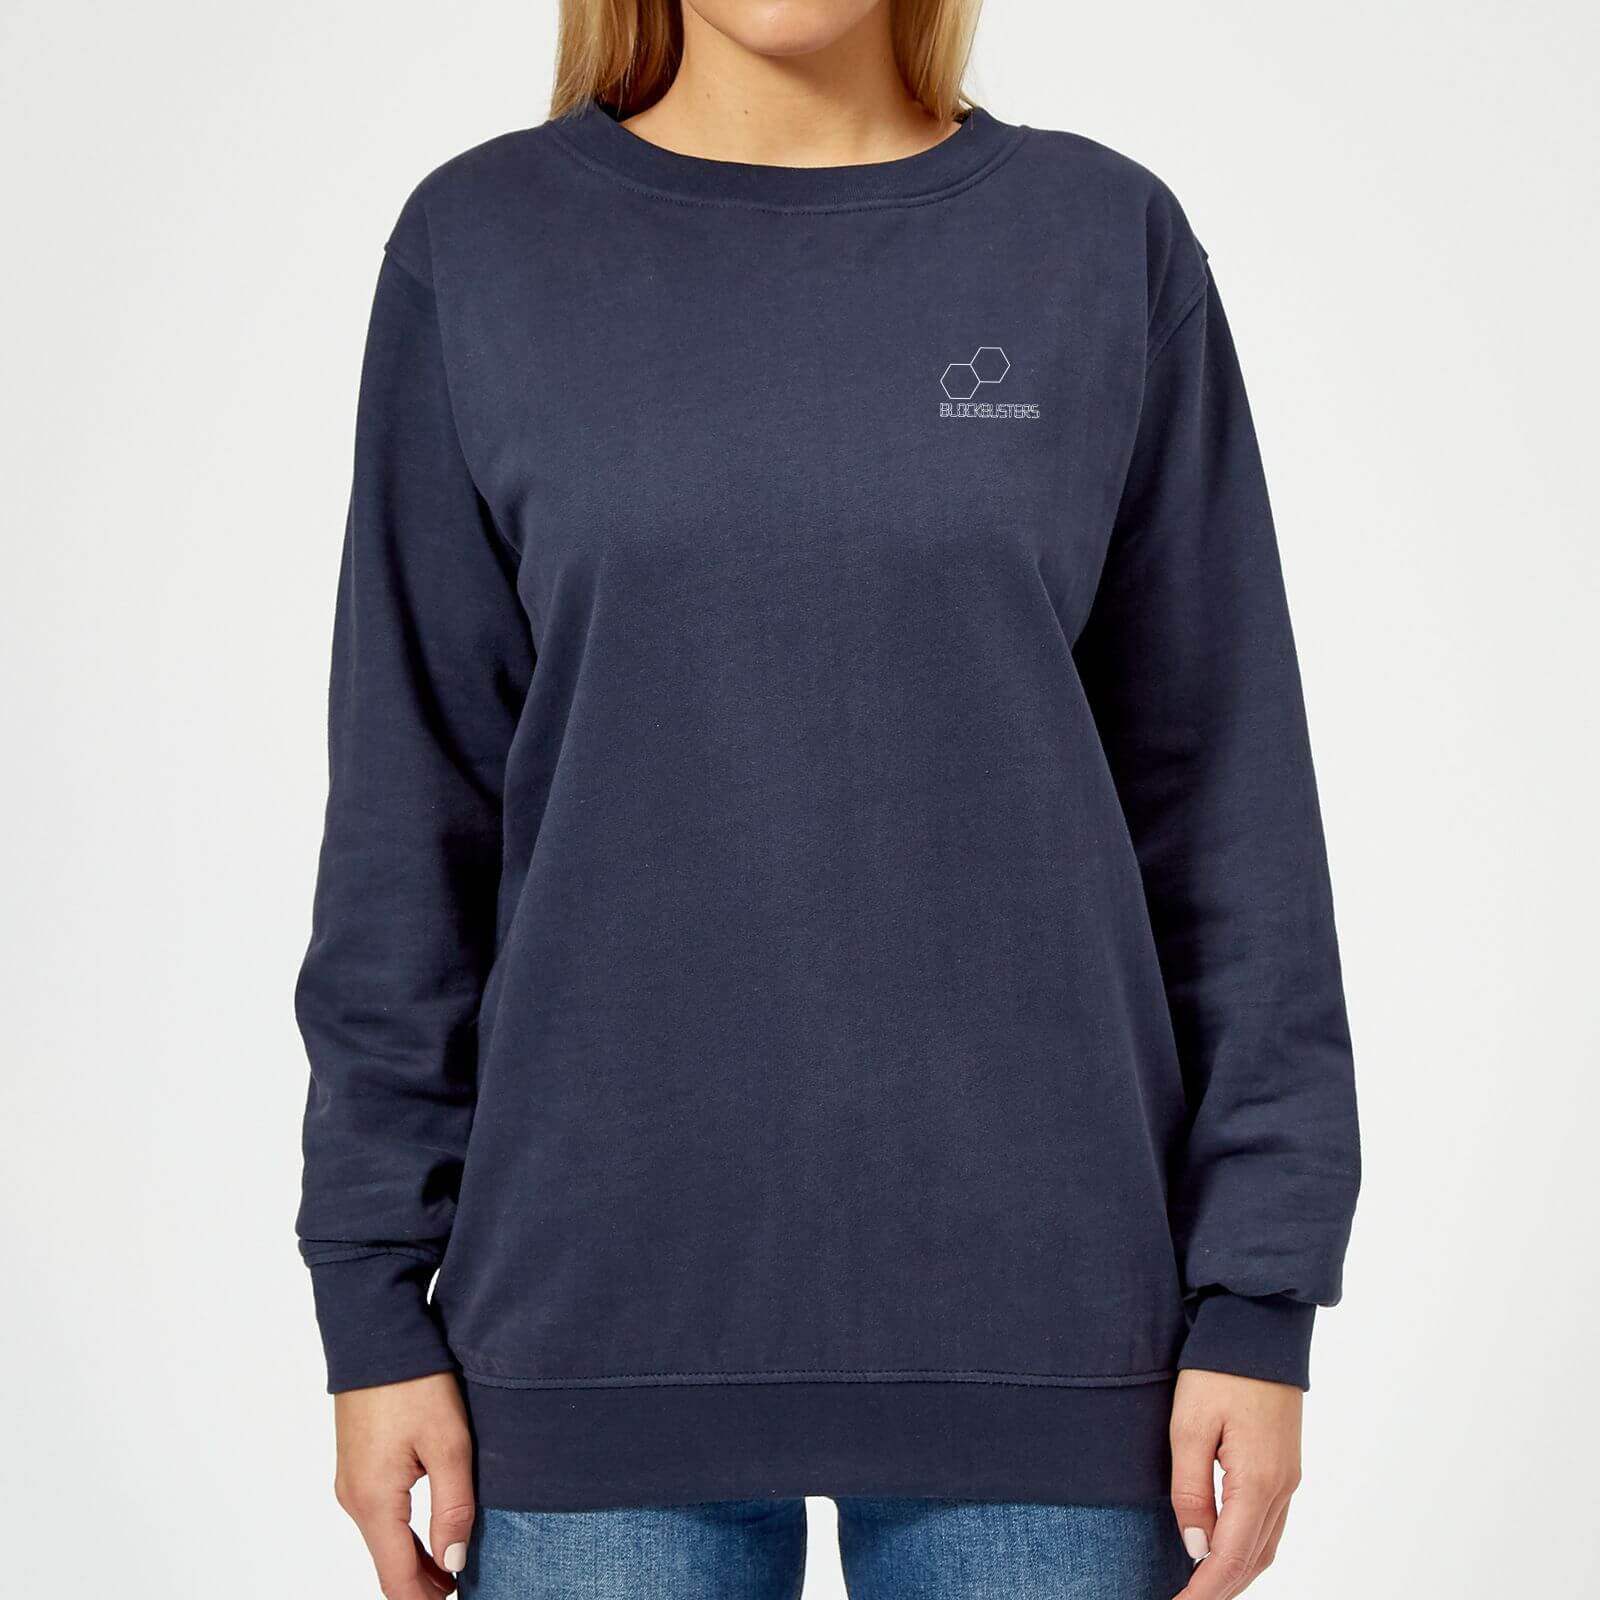 Blockbusters Pocket Print Women's Sweatshirt - Navy - XS - Navy